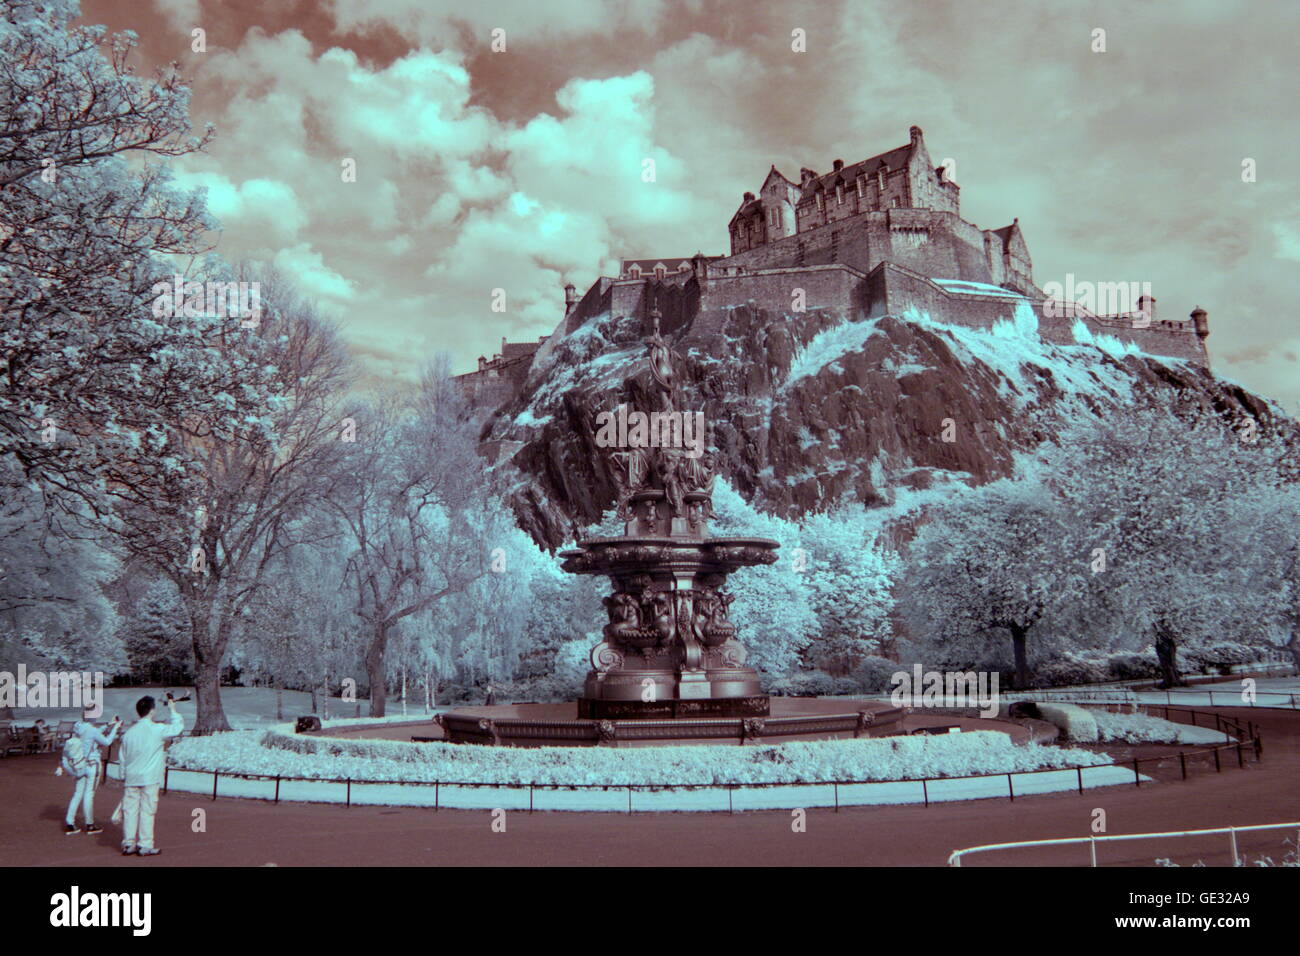 Edinburgh Castle infra red infrared from princes street gardens rock Stock Photo